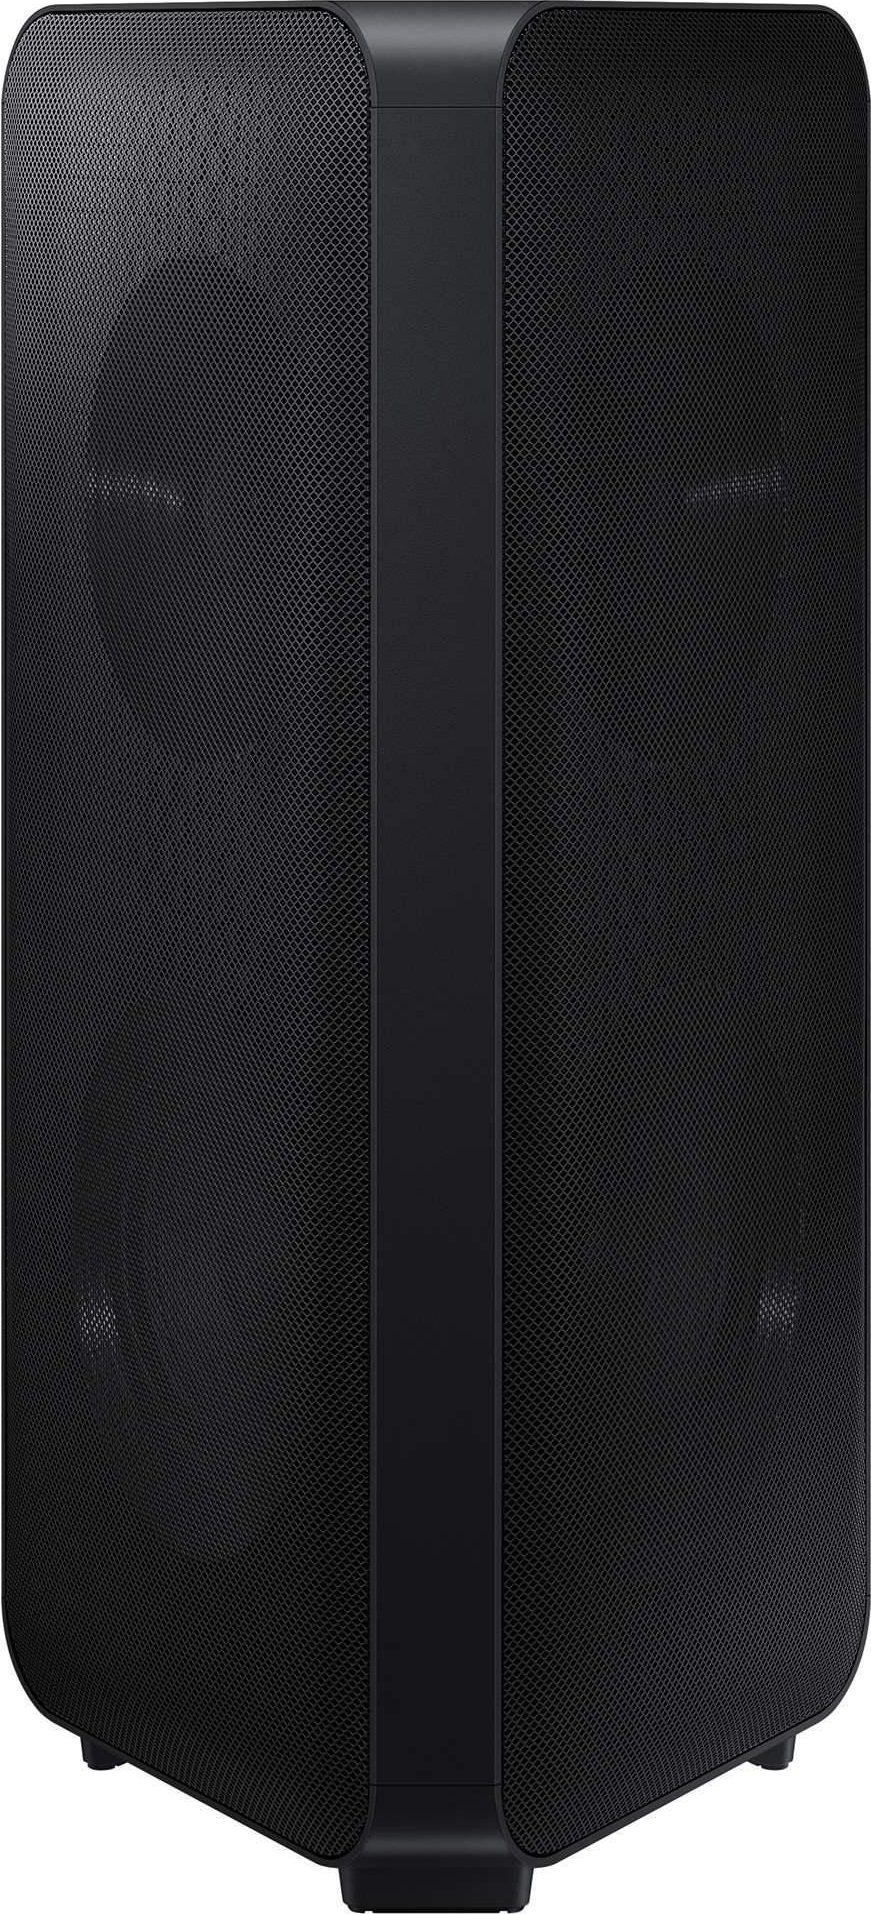 Boxe - Sistem audio portabil Samsung MX-ST50B, Bass booster, 240 W, Blueetooth , USB, IPX 5, Negru